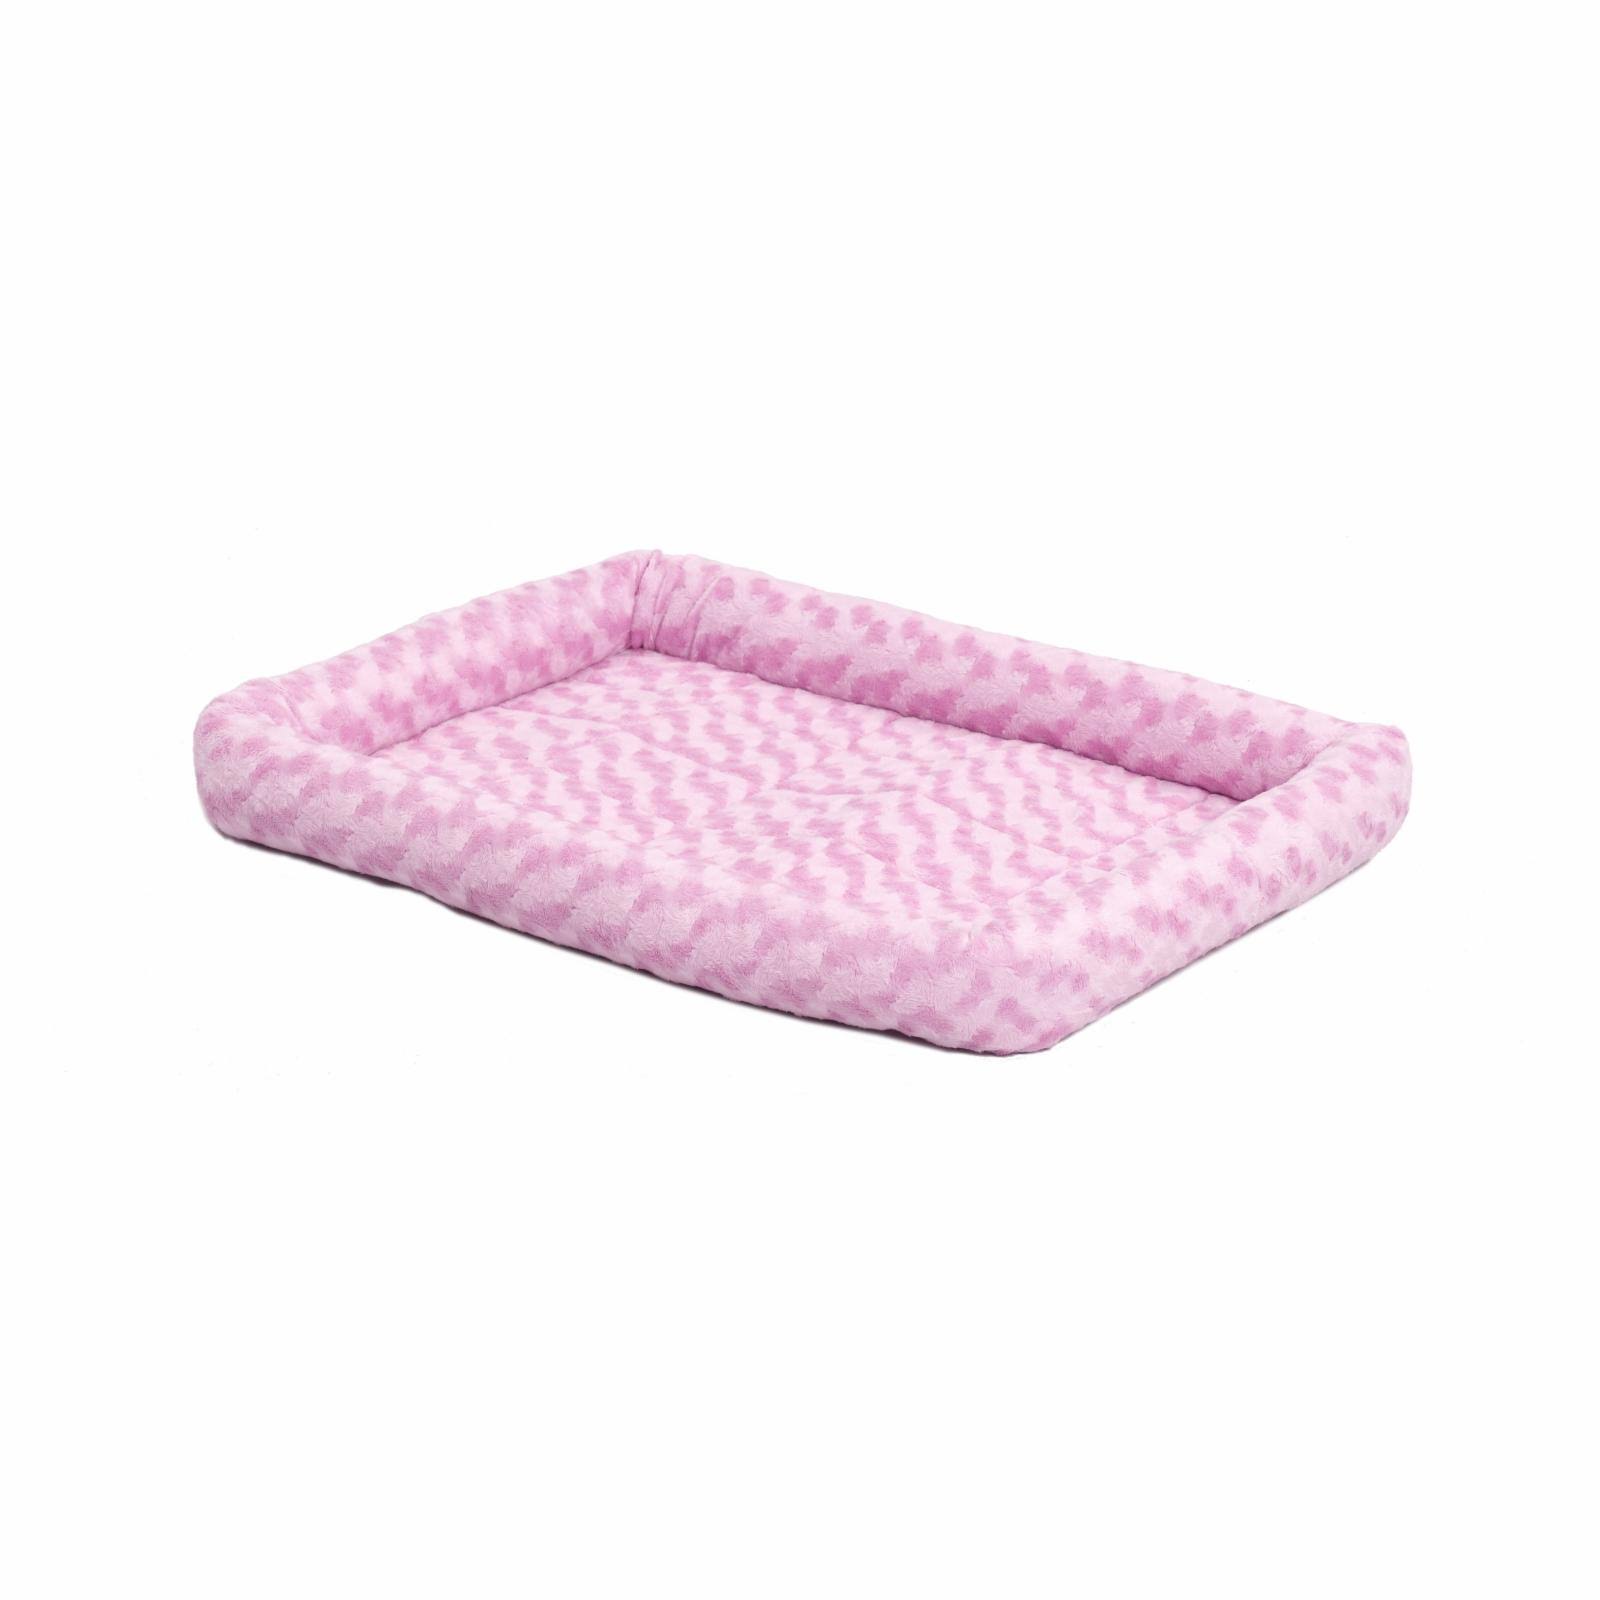 Midwest Quiet Time Pet Bed - Pink, 60cm